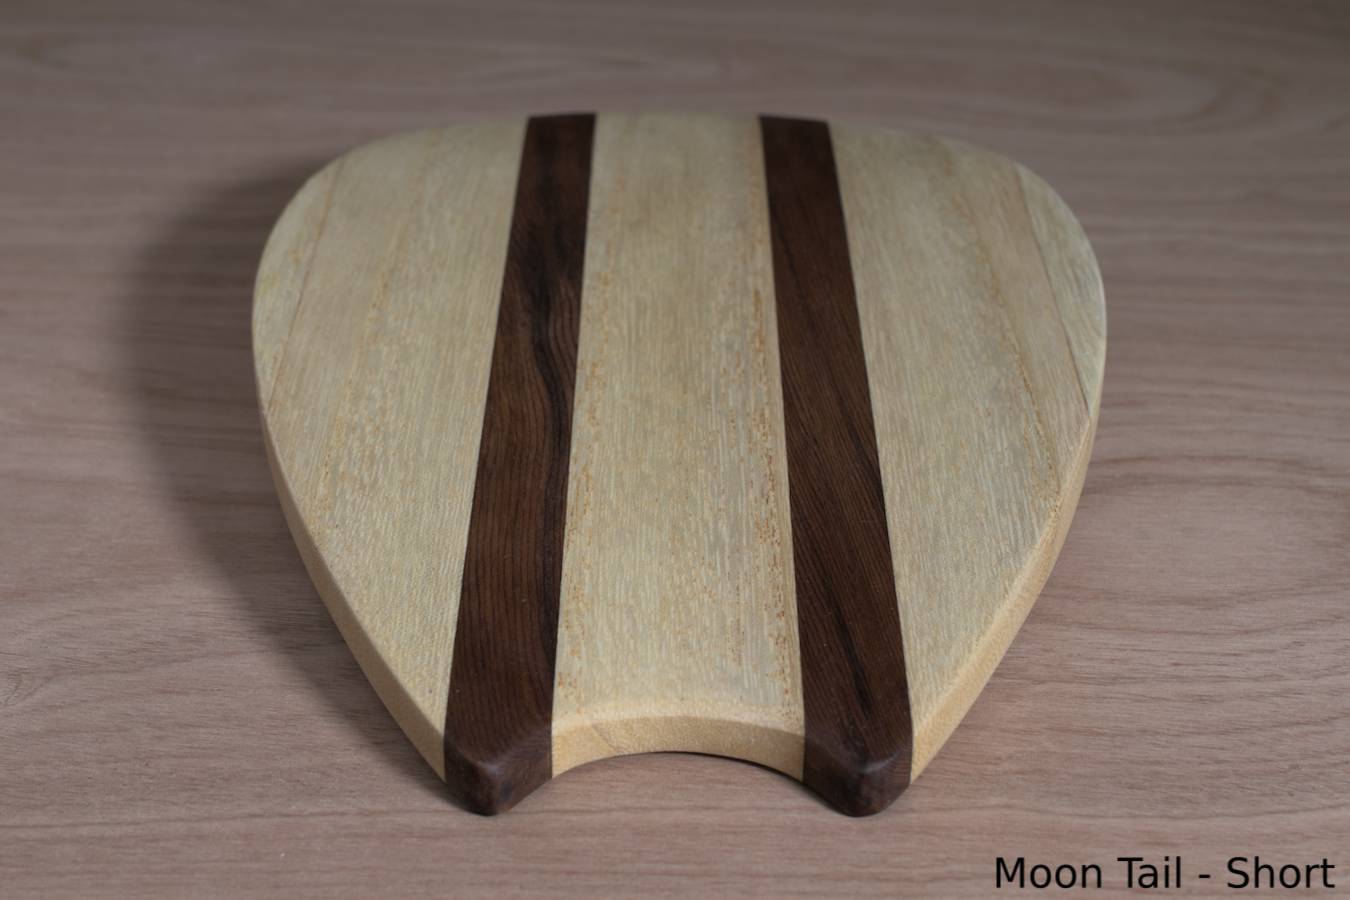 Moon Tail (short) wooden handplane handmade by Fyne Boat Kits